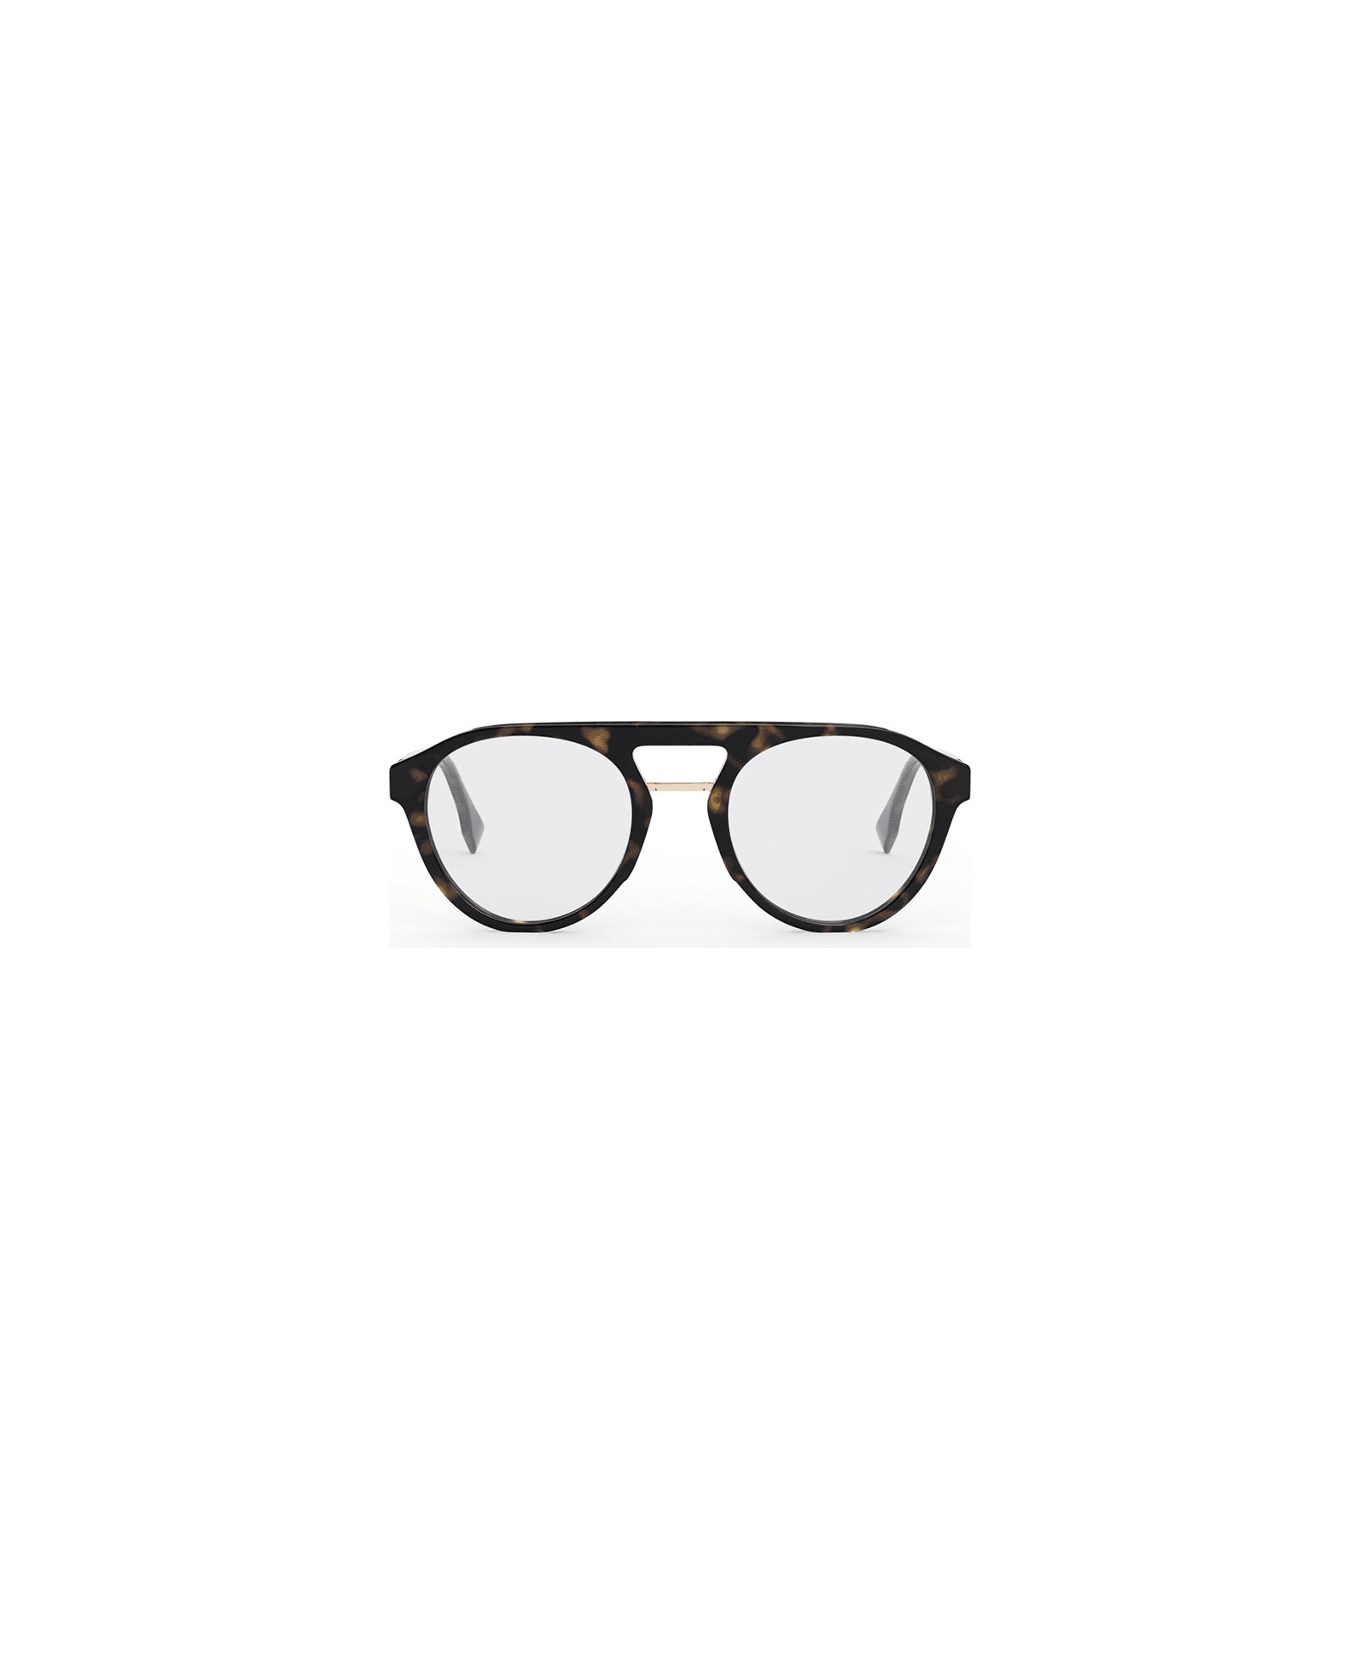 Fendi Eyewear FE50027i 052 Glasses